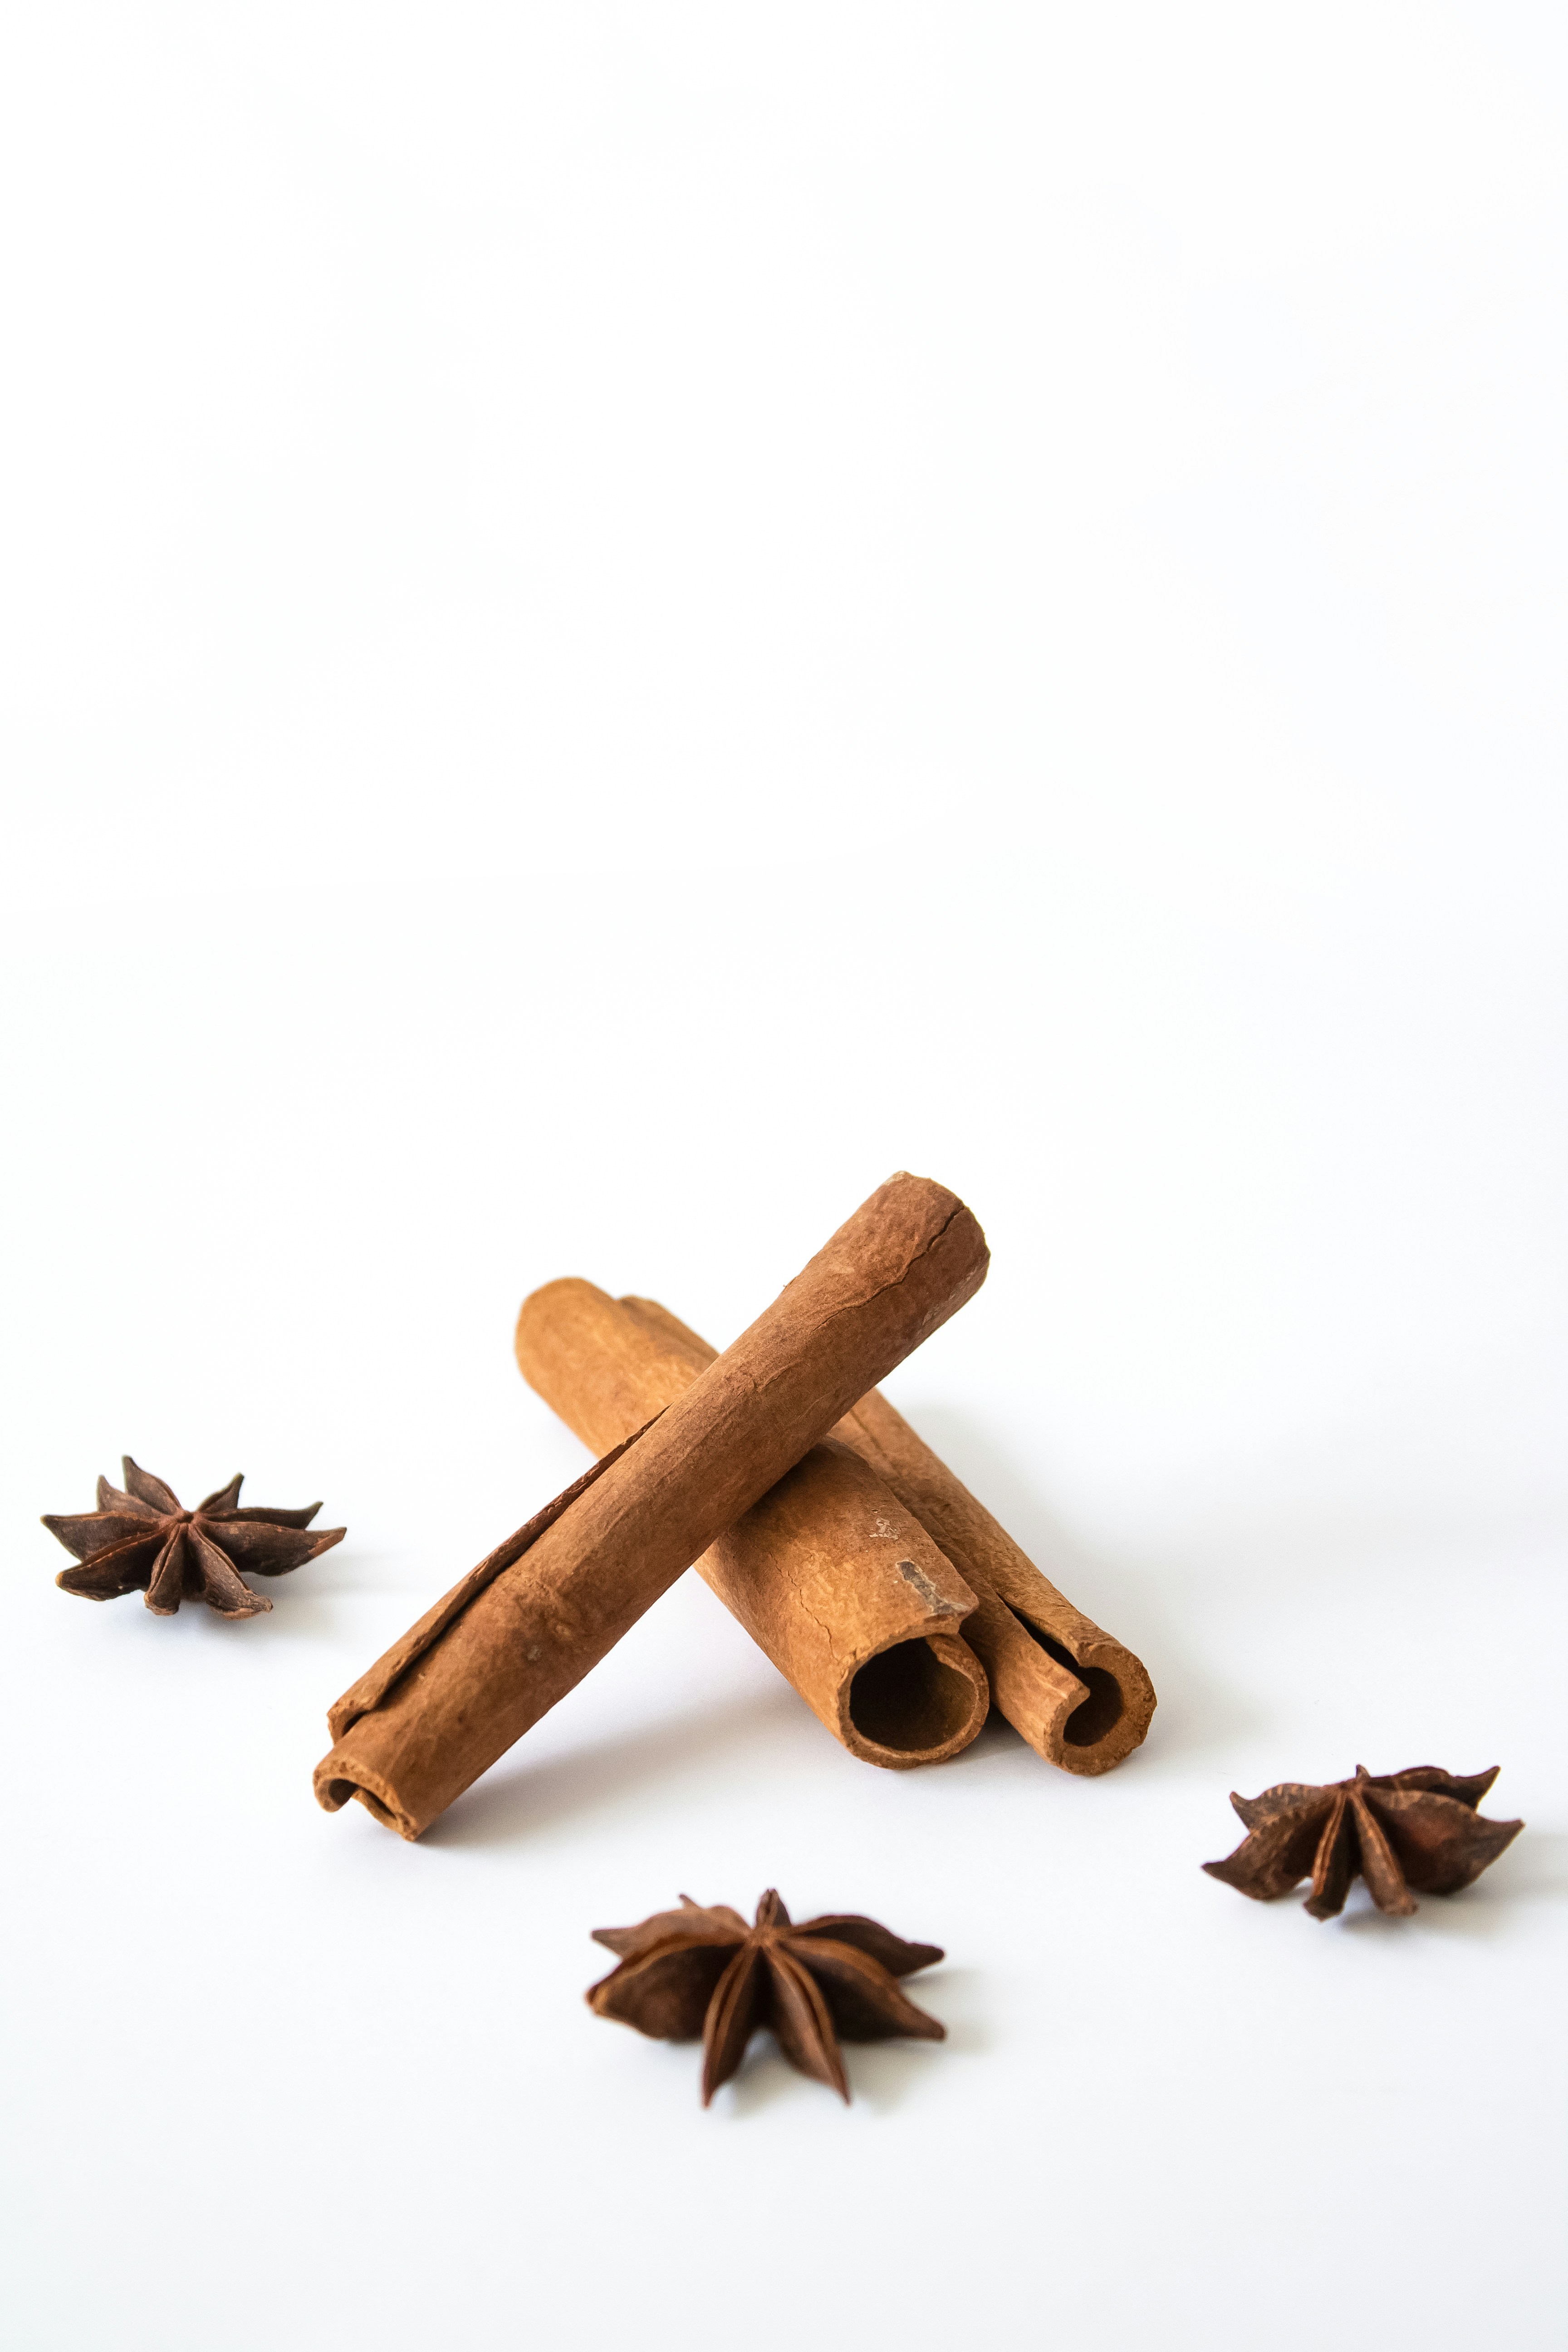 Can Cinnamon Help In Managing Blood Sugar Levels?